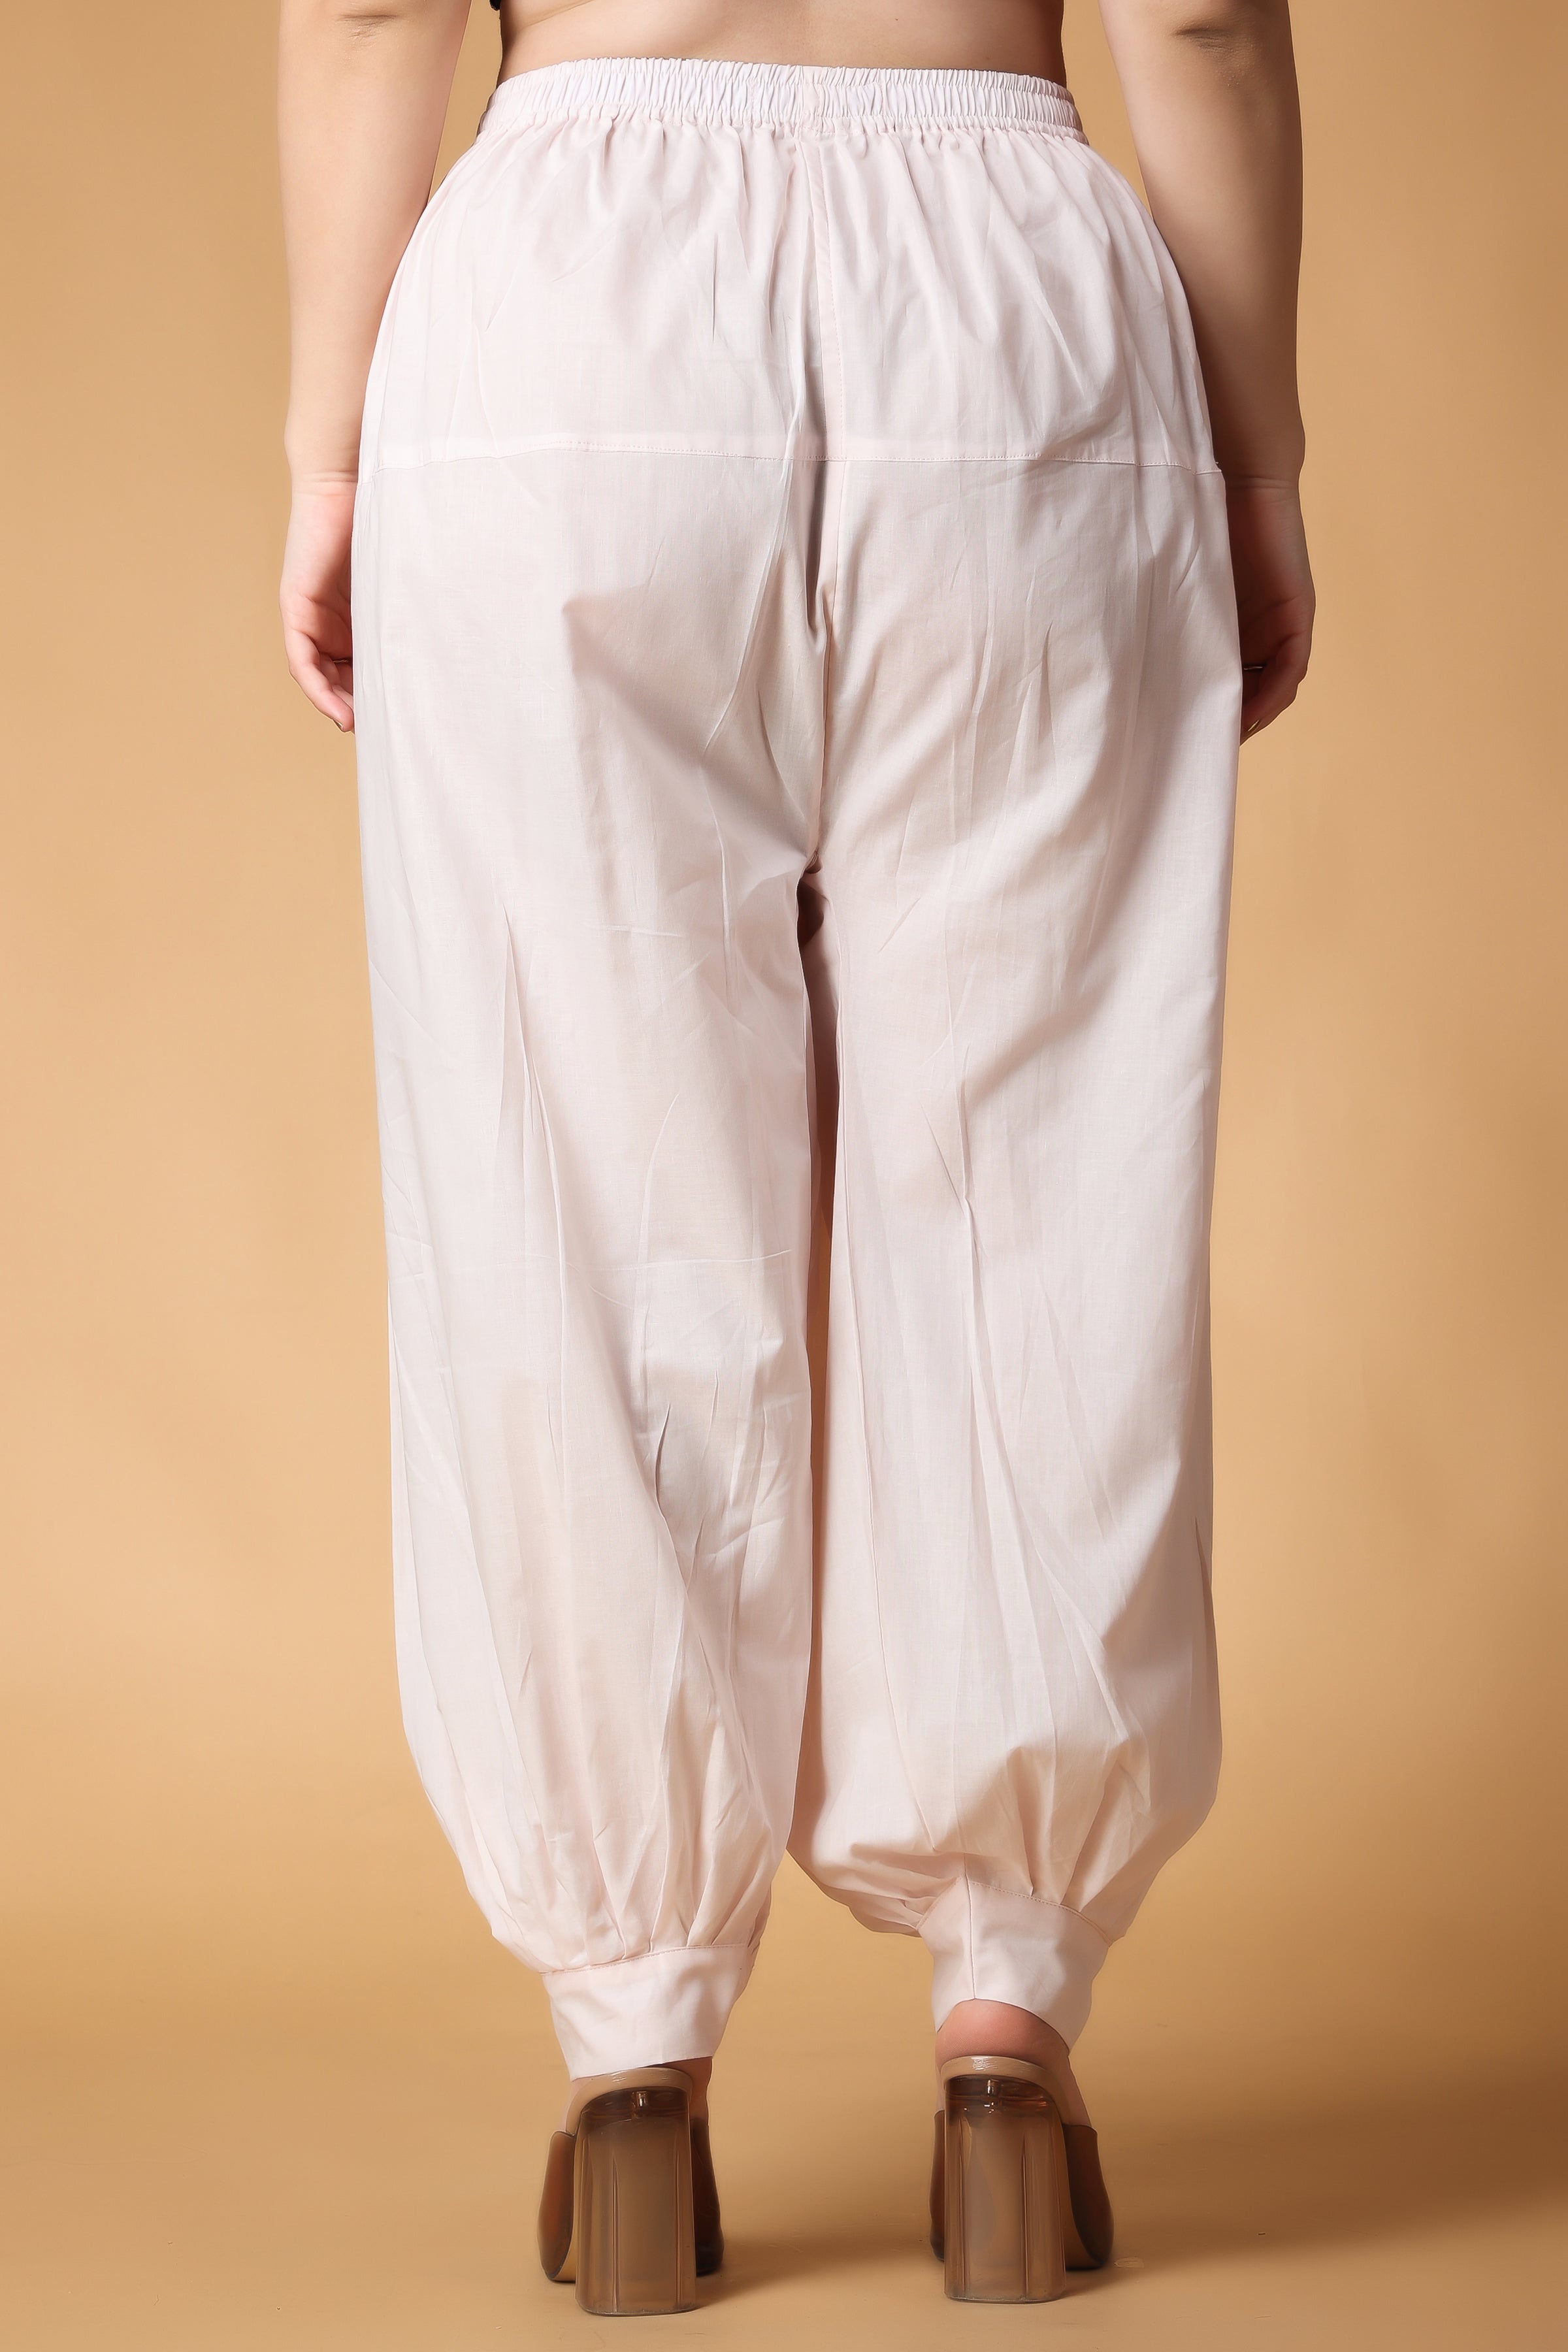 men women harem pants yoga pant afghani baggy gypsy causal drop crotch  trouser | eBay